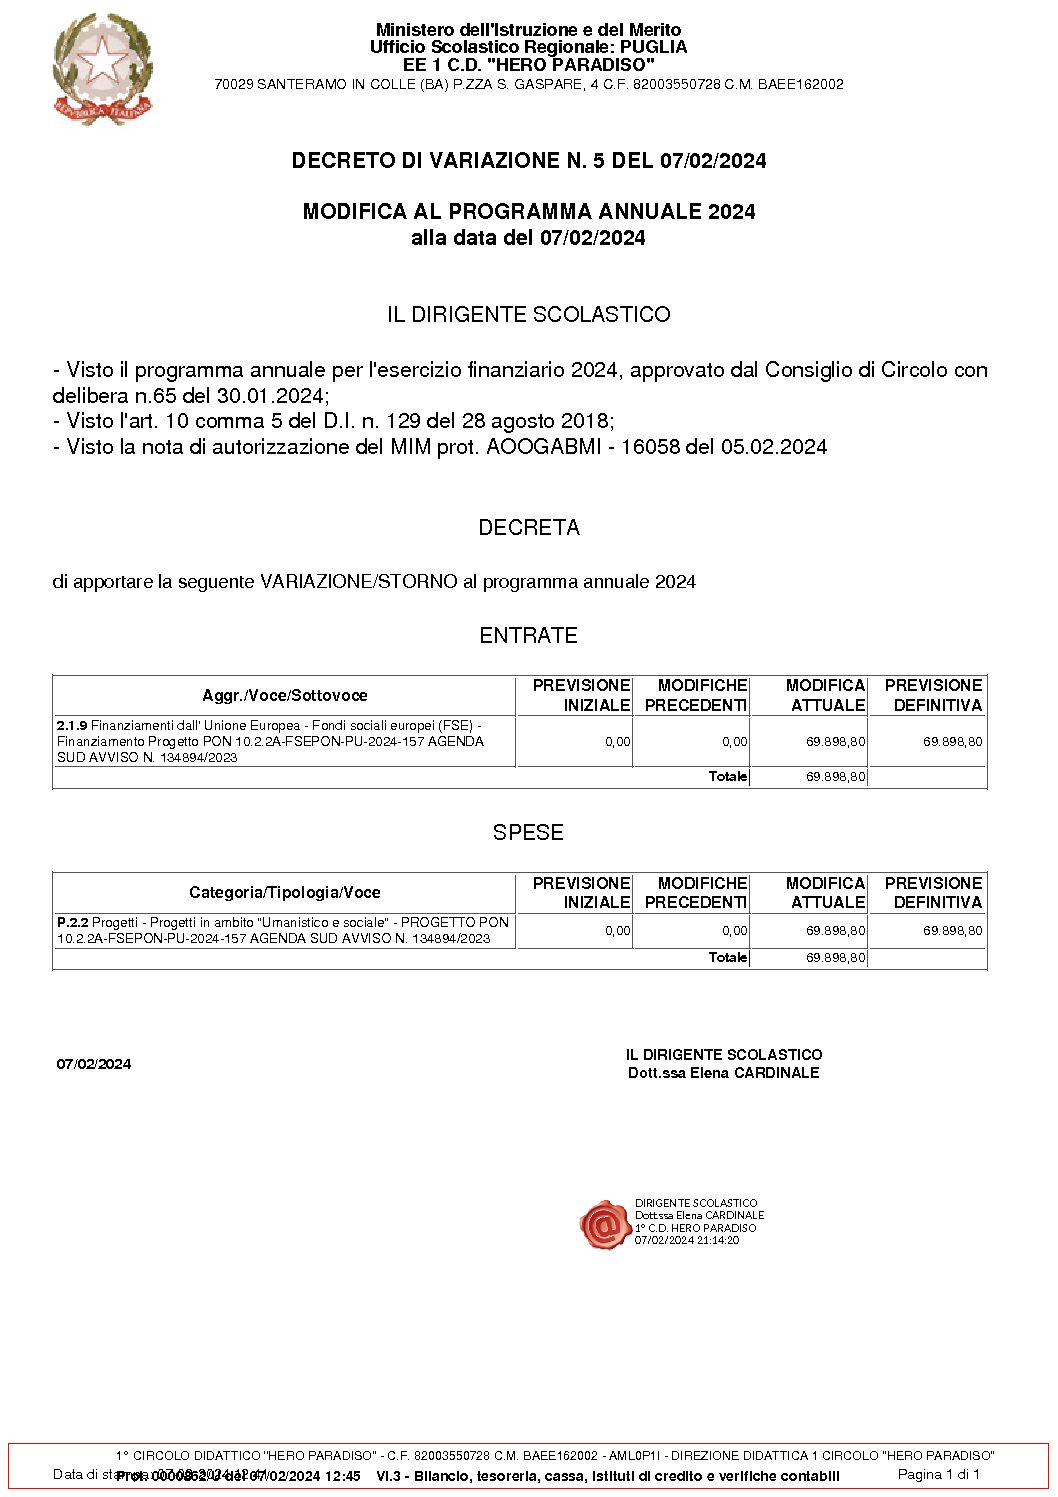 Decreto_variazione_di_bilancio_n.5_del_07.02.2024.pdf.pades